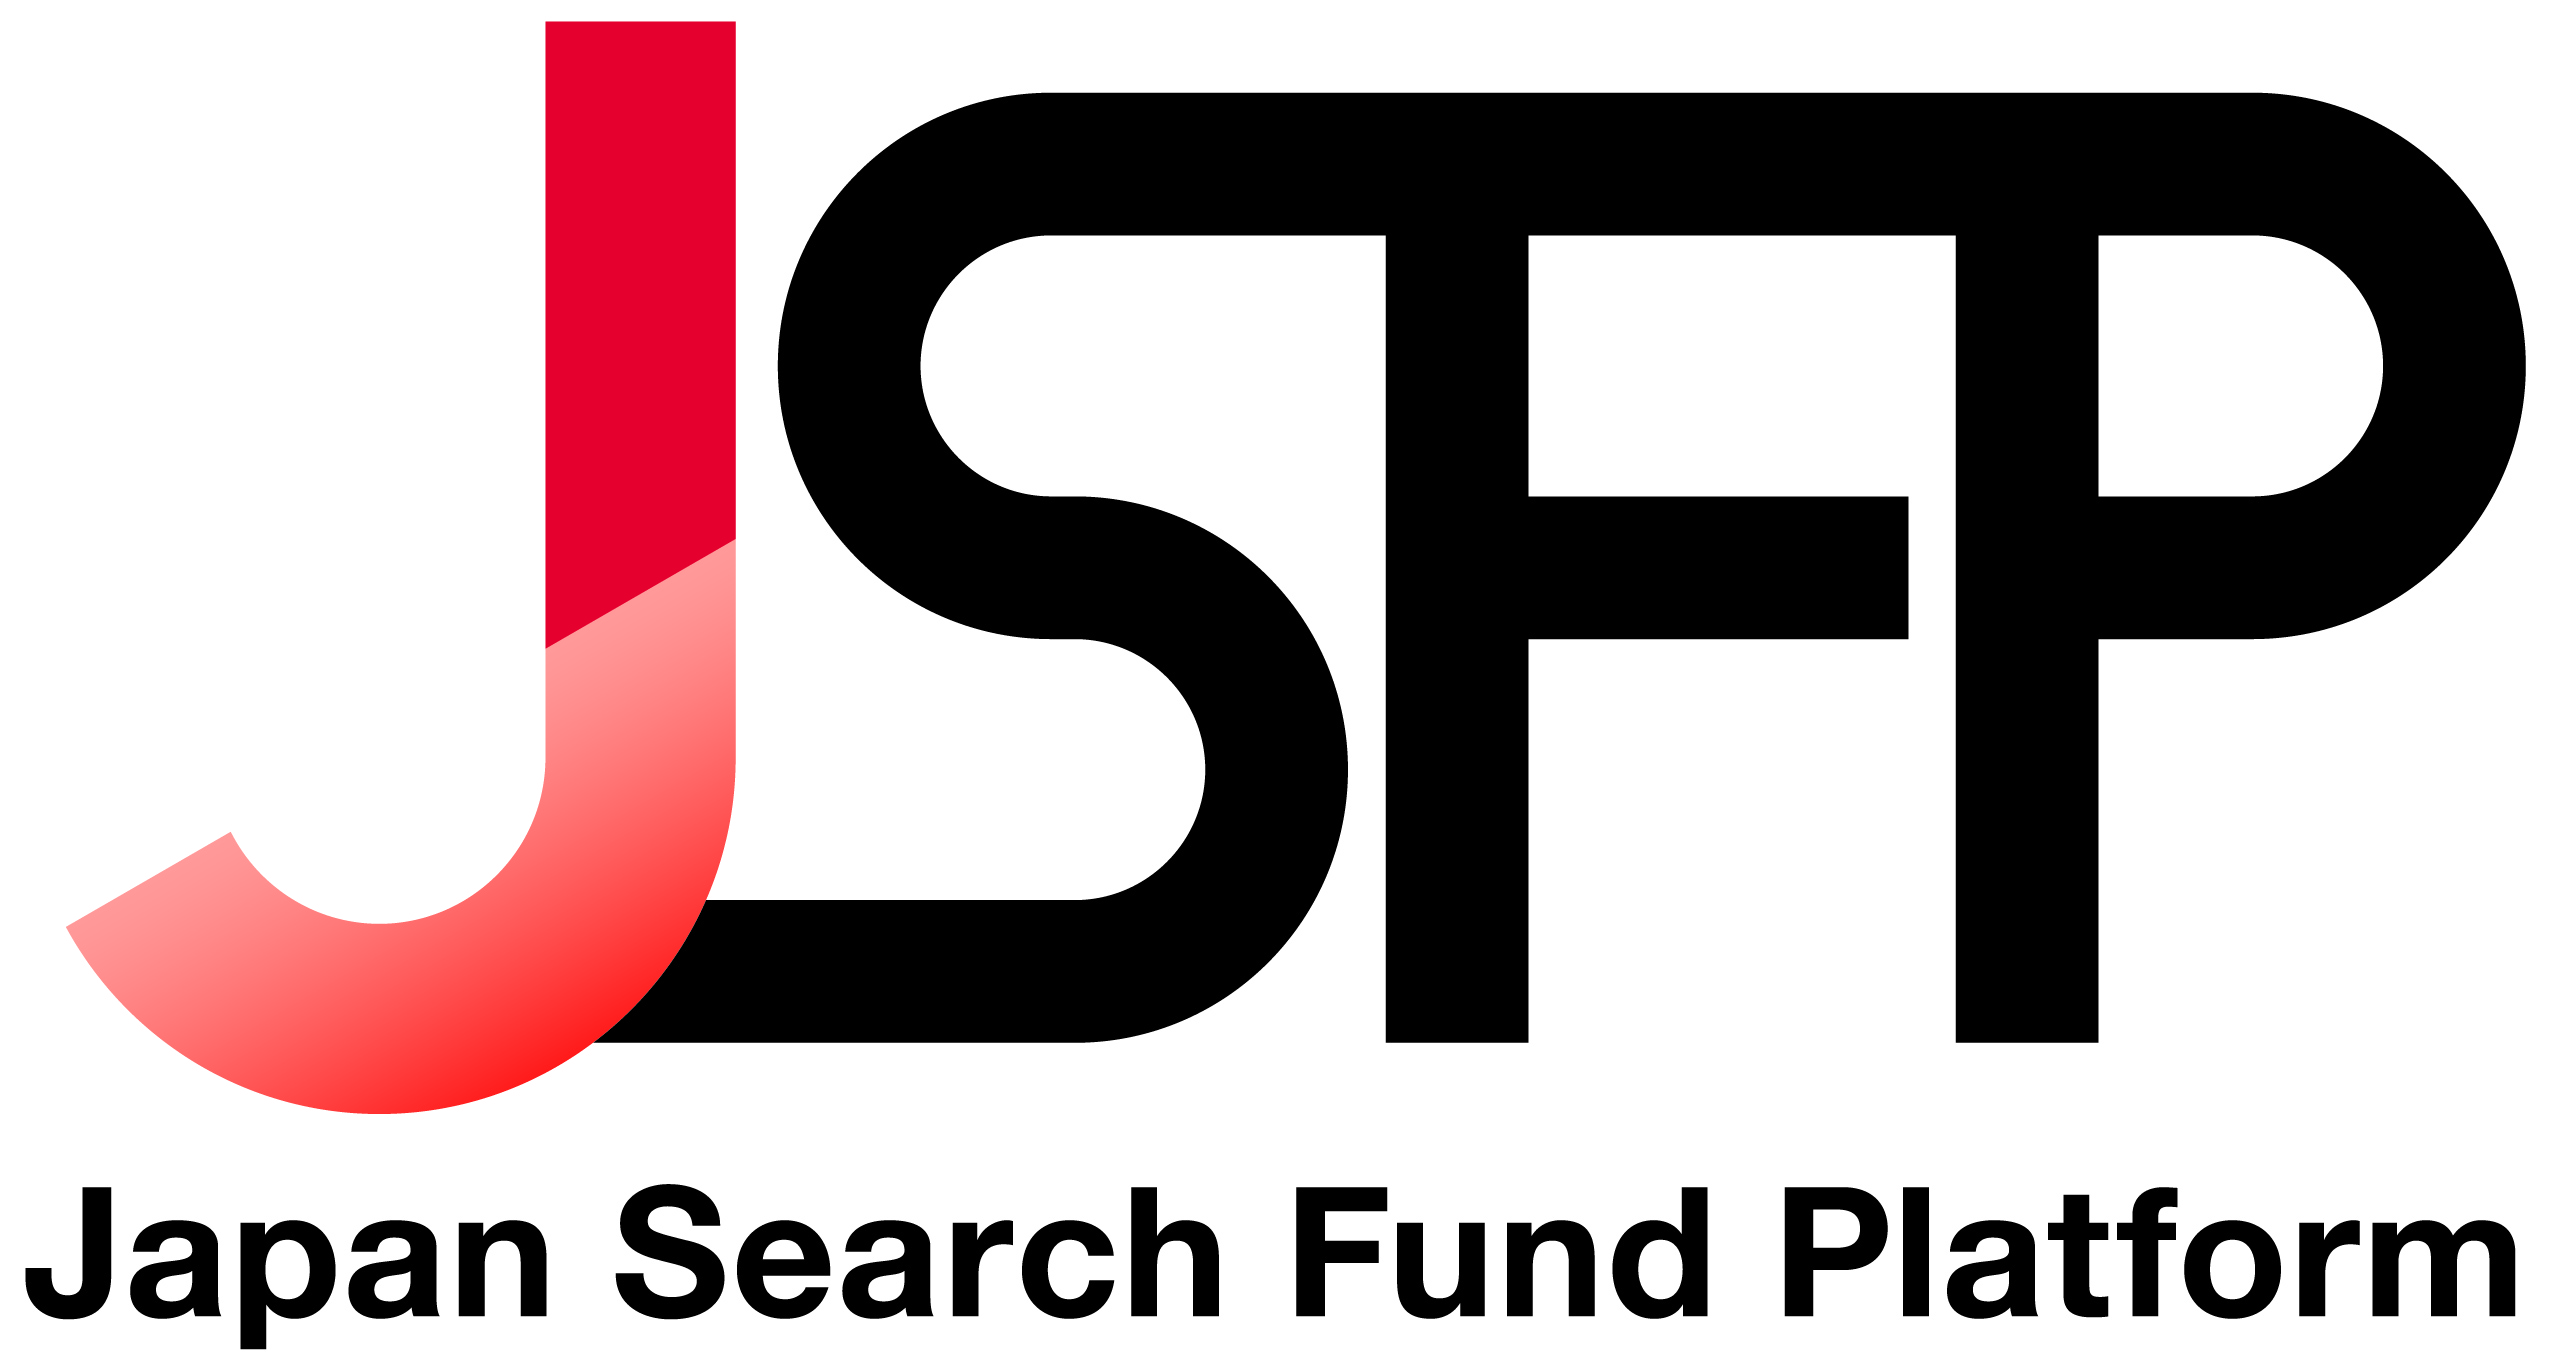 SFPは、日本全国を対象にサーチファンドに挑むアントレプレナーへの投資/支援を行うプラットフォームです。